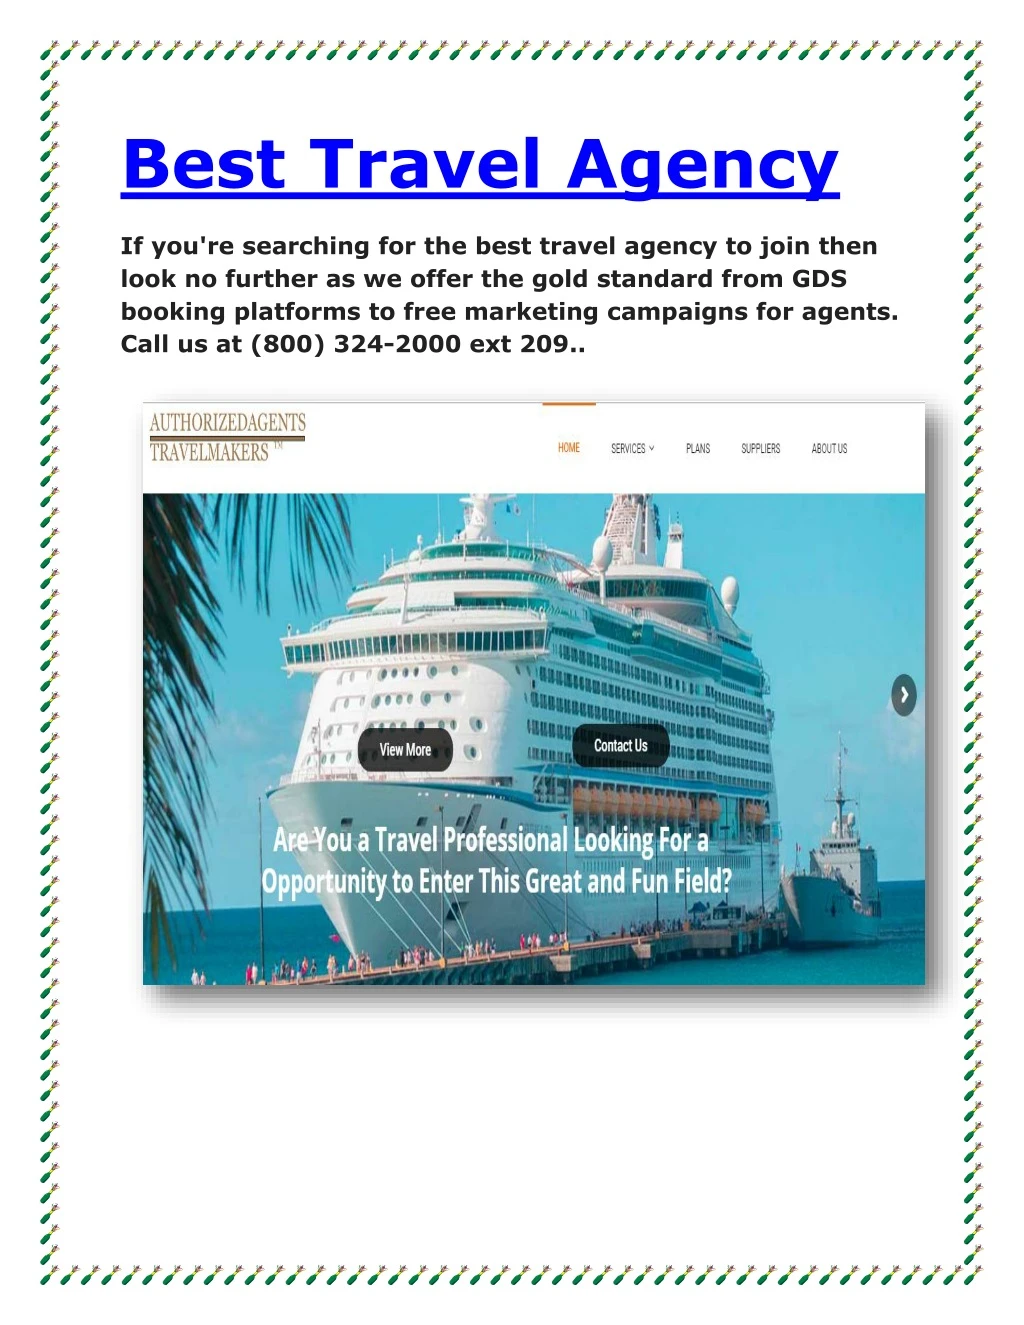 best travel agency